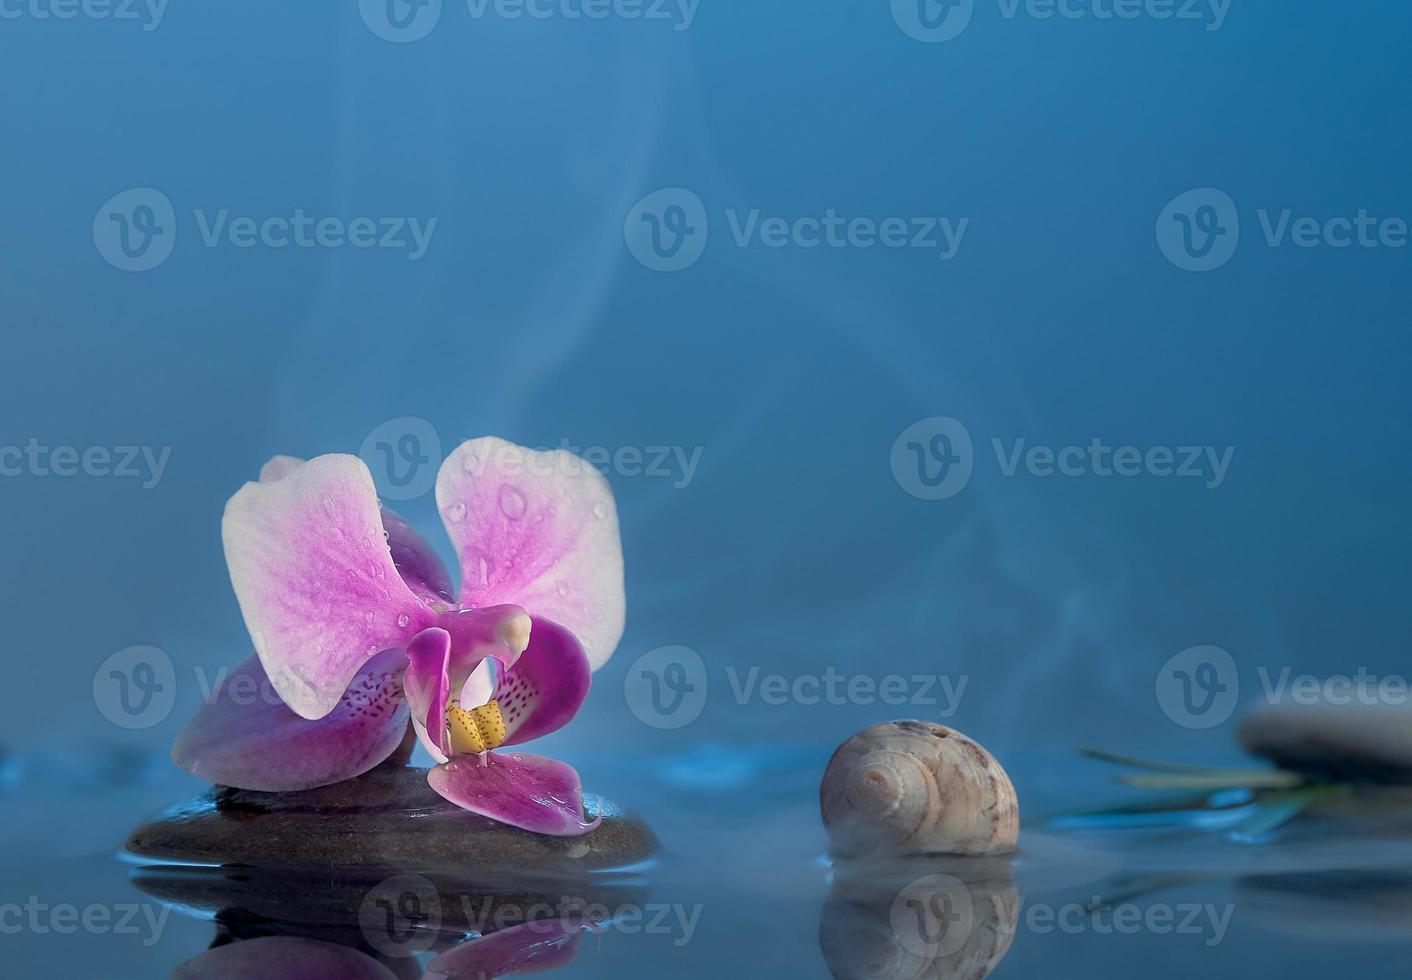 natureza morta com orquídea rosa. relaxantes pedras de orquídea rosa de fundo azul, conchas na água com neblina. conceito de spa. foto